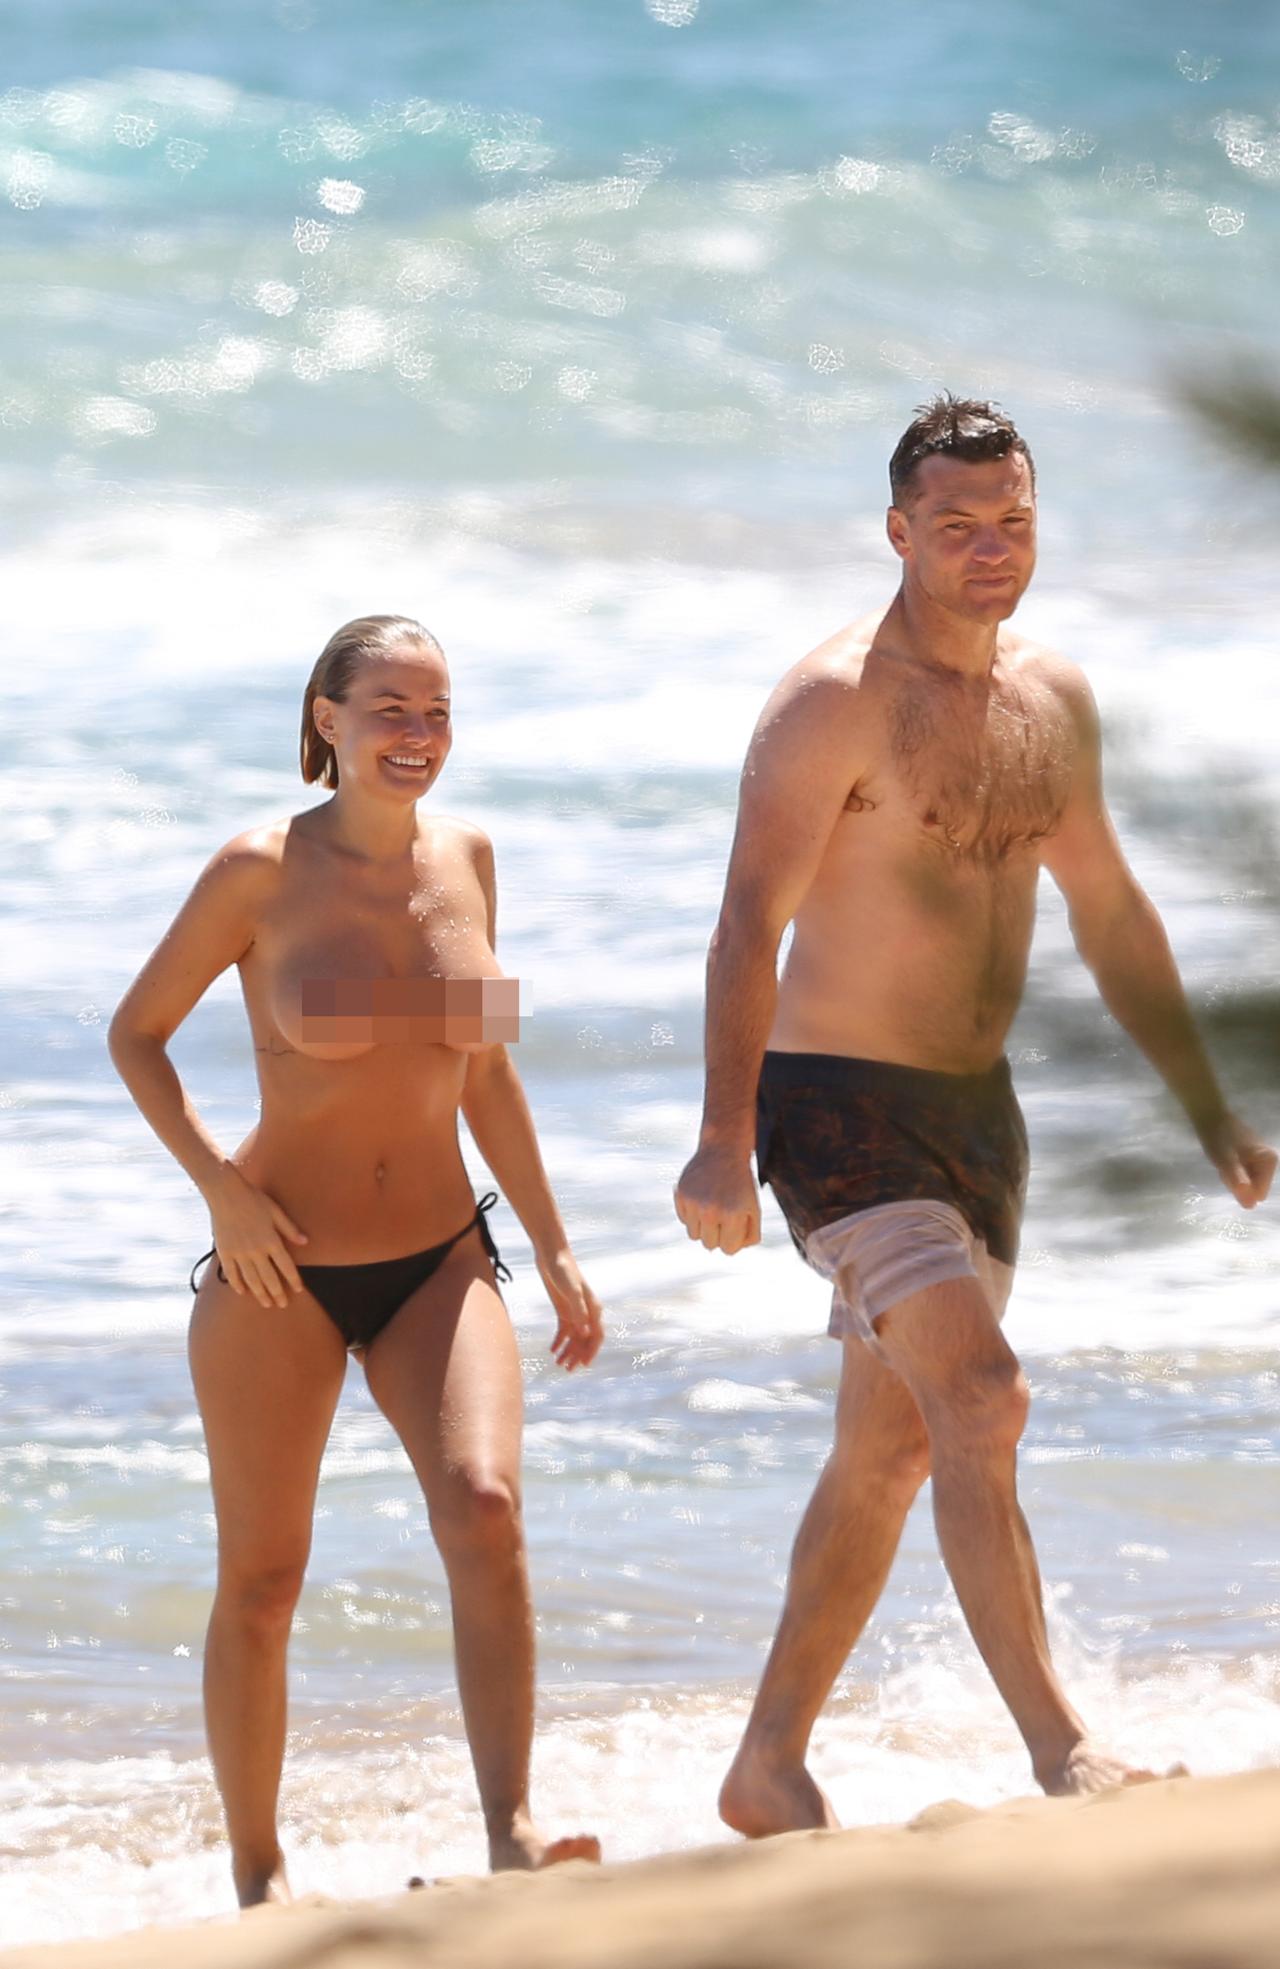 Singapore Beach Topless - Lara Bingle topless and nude with Sam Worthington in Hawaii ...